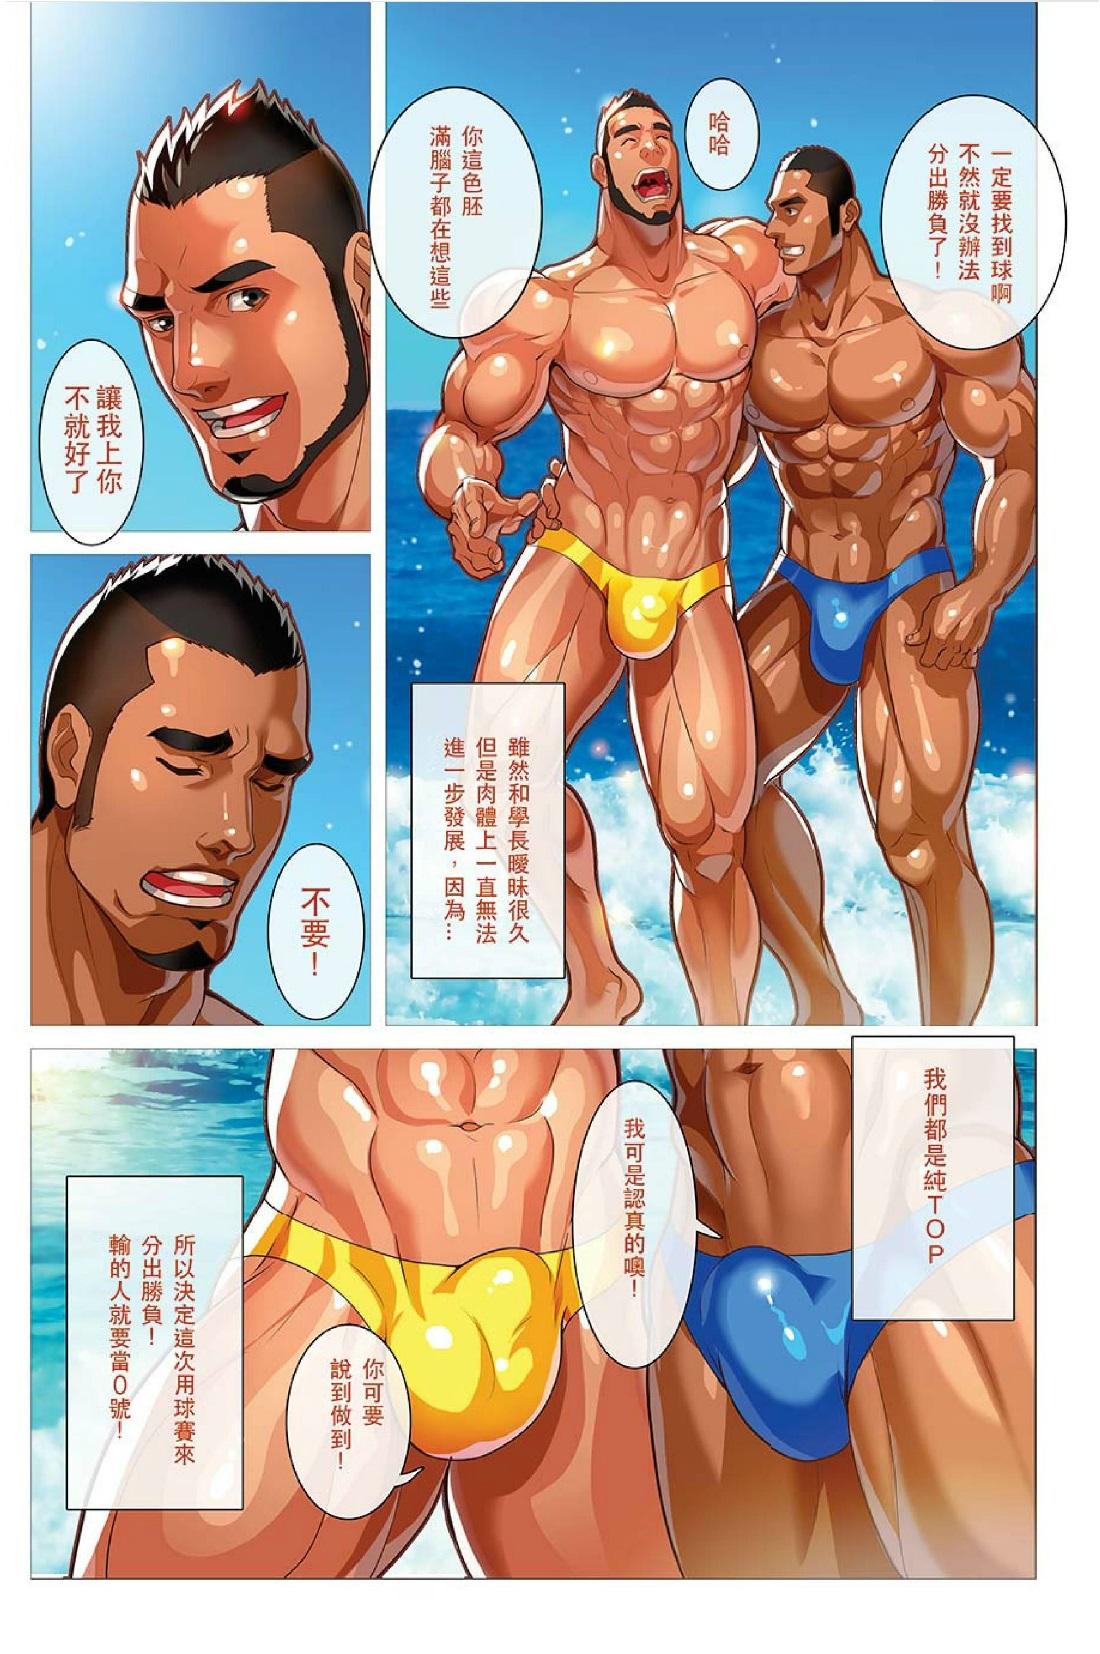 Brasil 夏日男子筋肉潛艇堡 (Summer's end Muscle Heat - The Boys Of Summer 2015) by 大雄 (Da Sexy Xiong) + Bonus Prequel [CH] Amature - Page 4